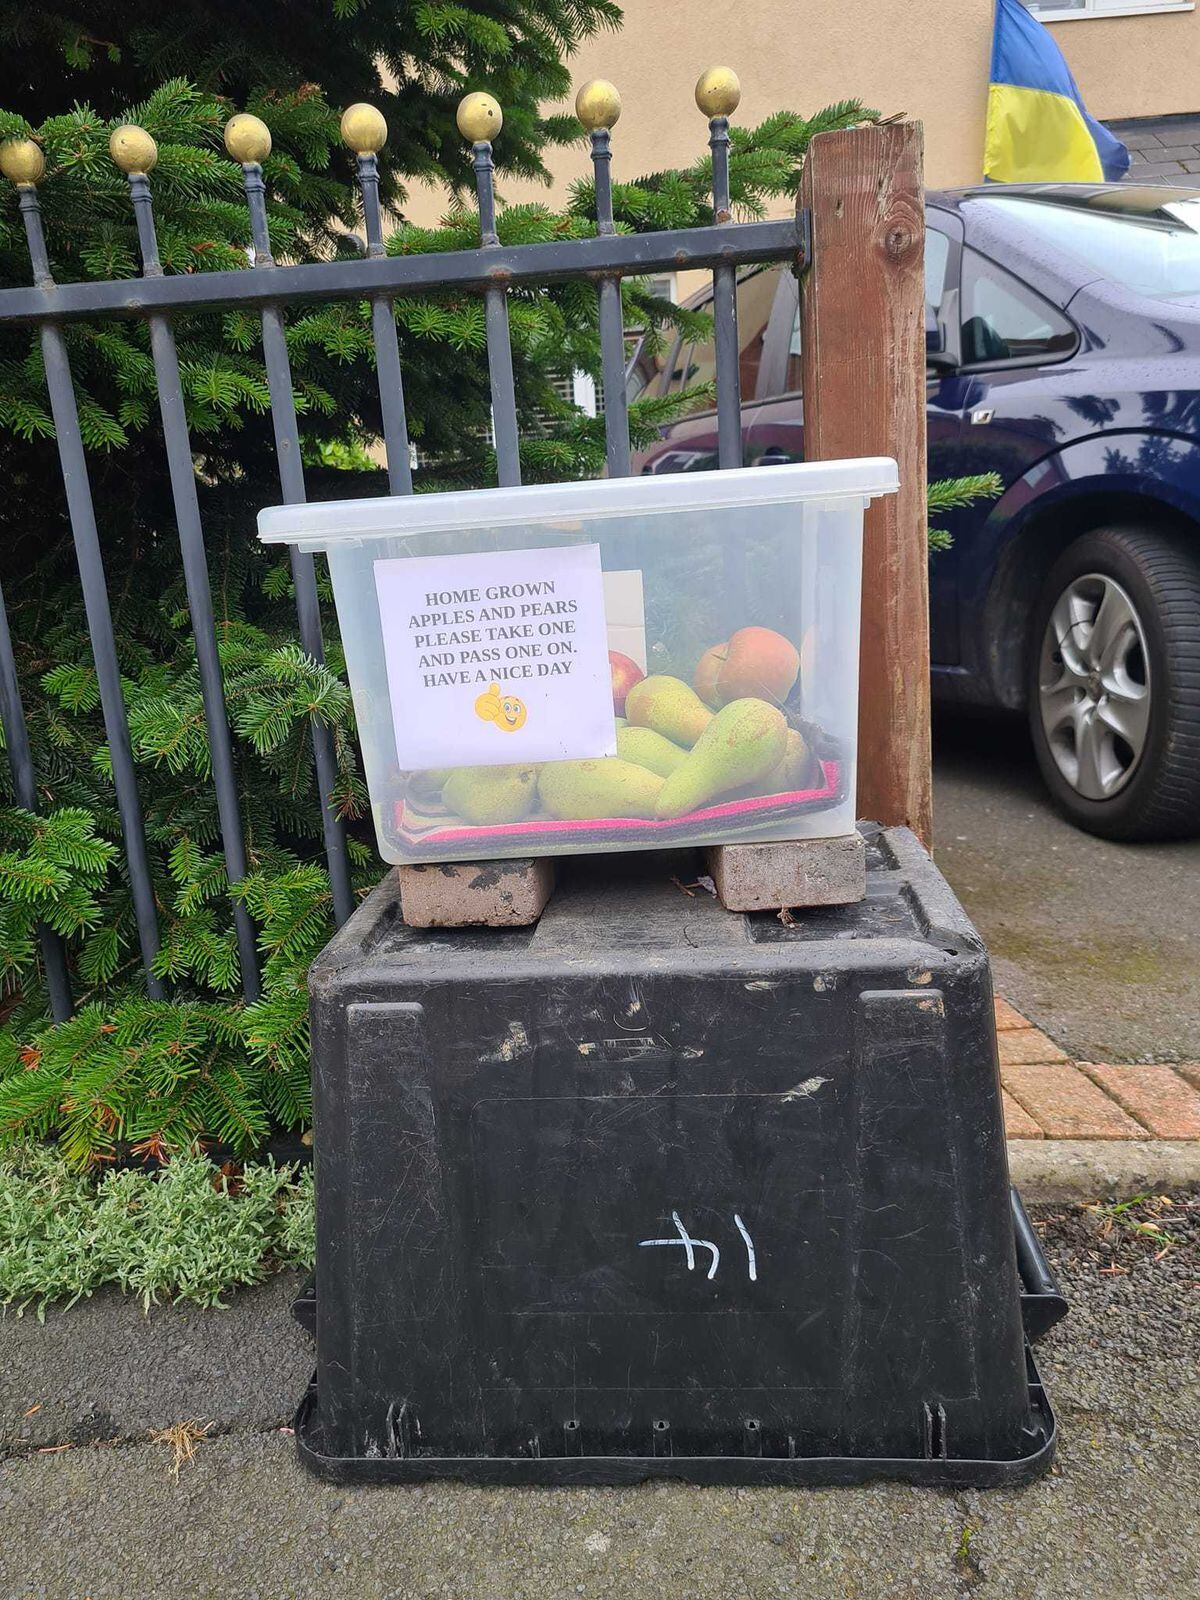 Gone but not forgotten - the fruit box